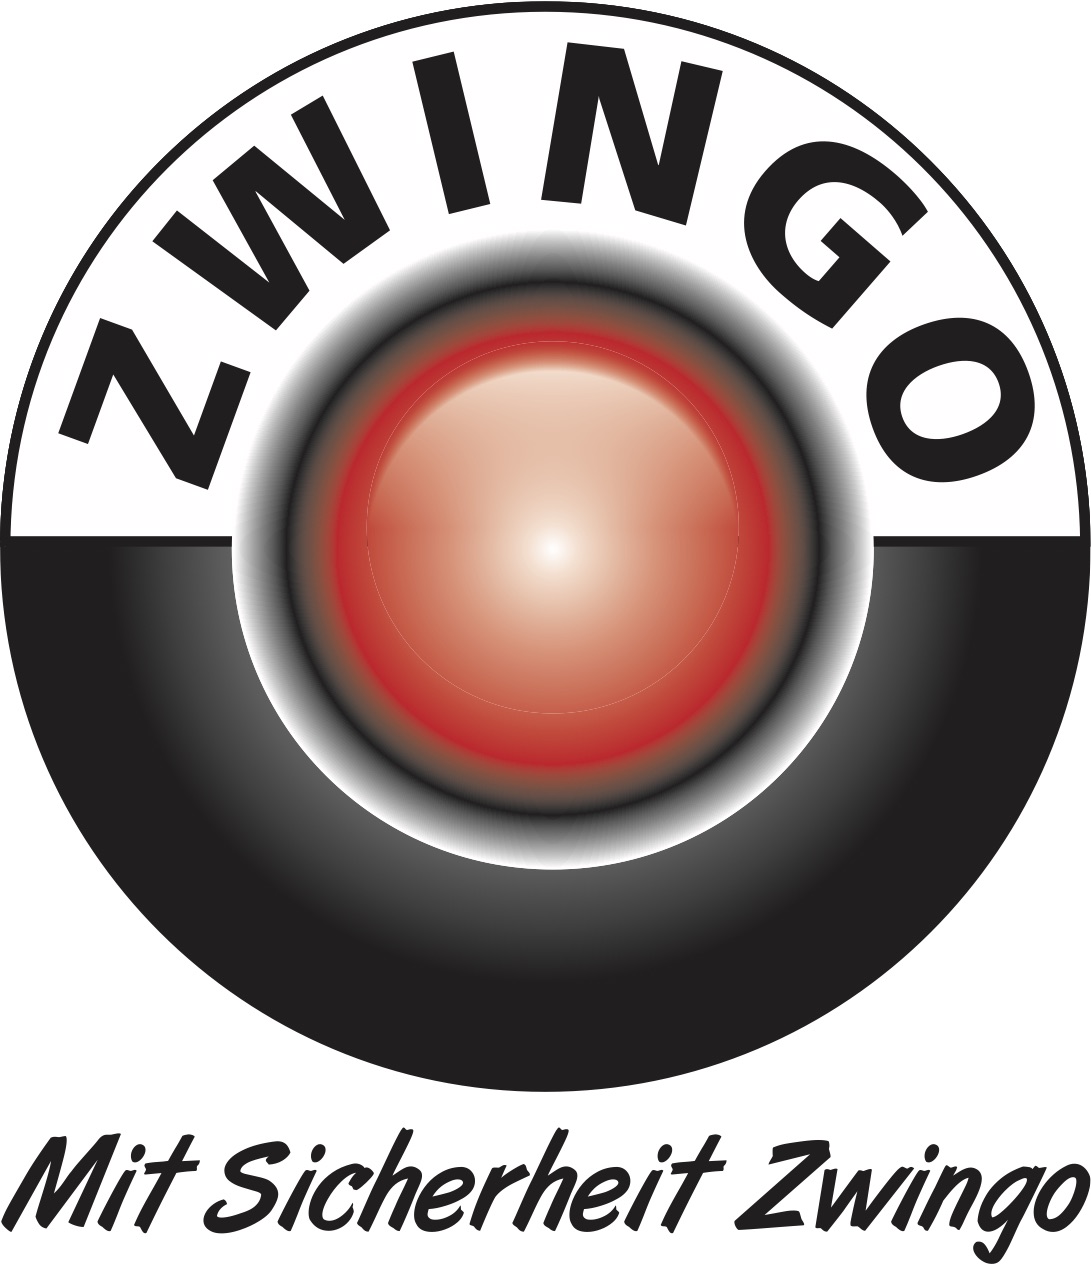 ZWINGO Waste Management GmbH